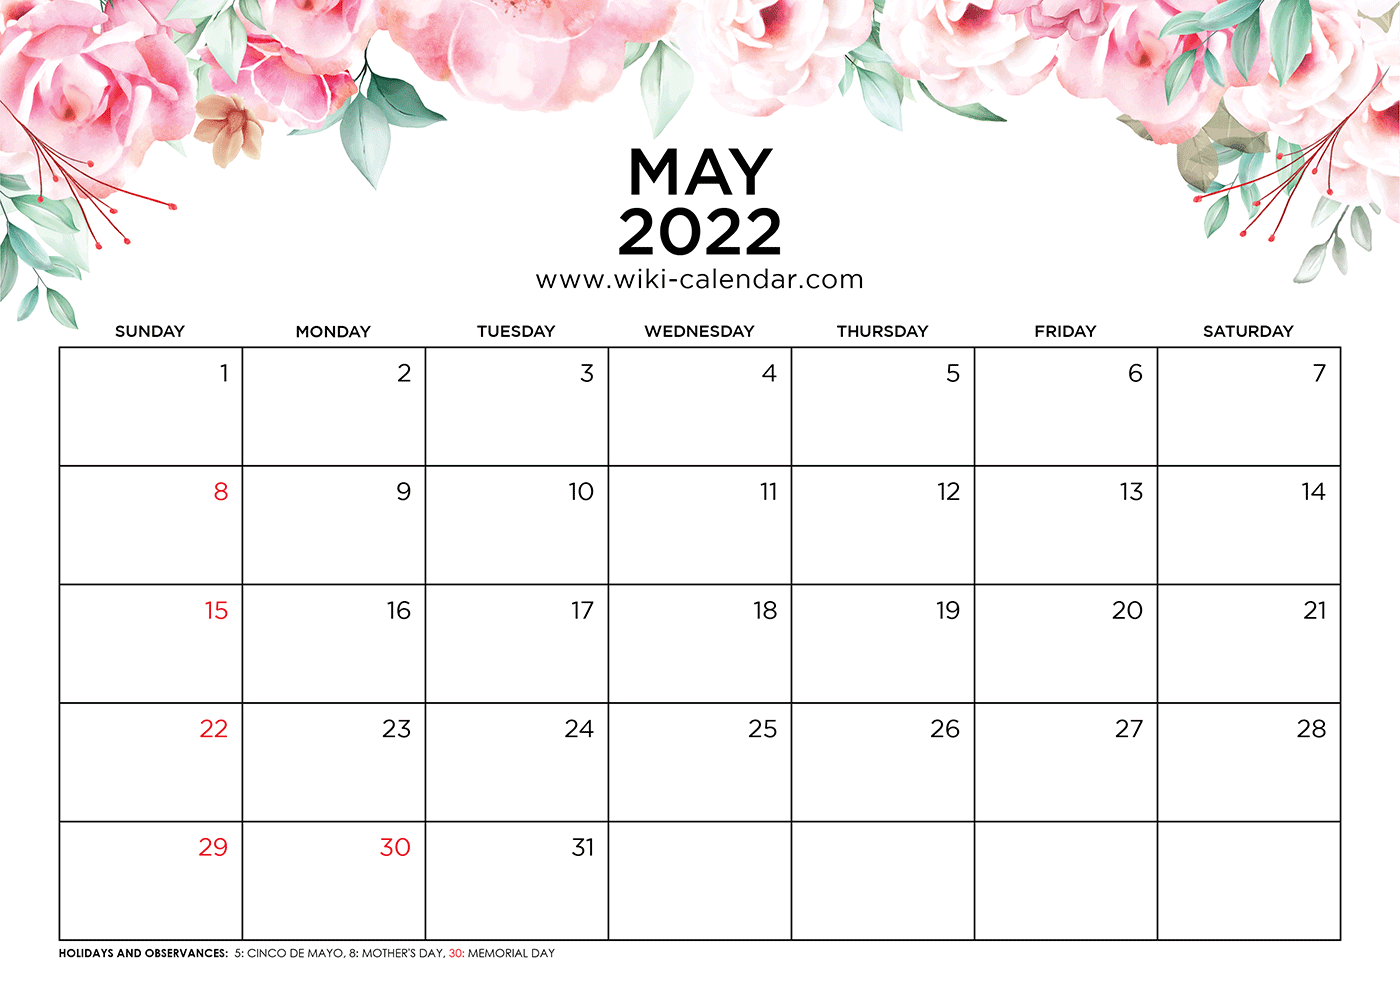 May 2022 Calendar Printable with Holidays